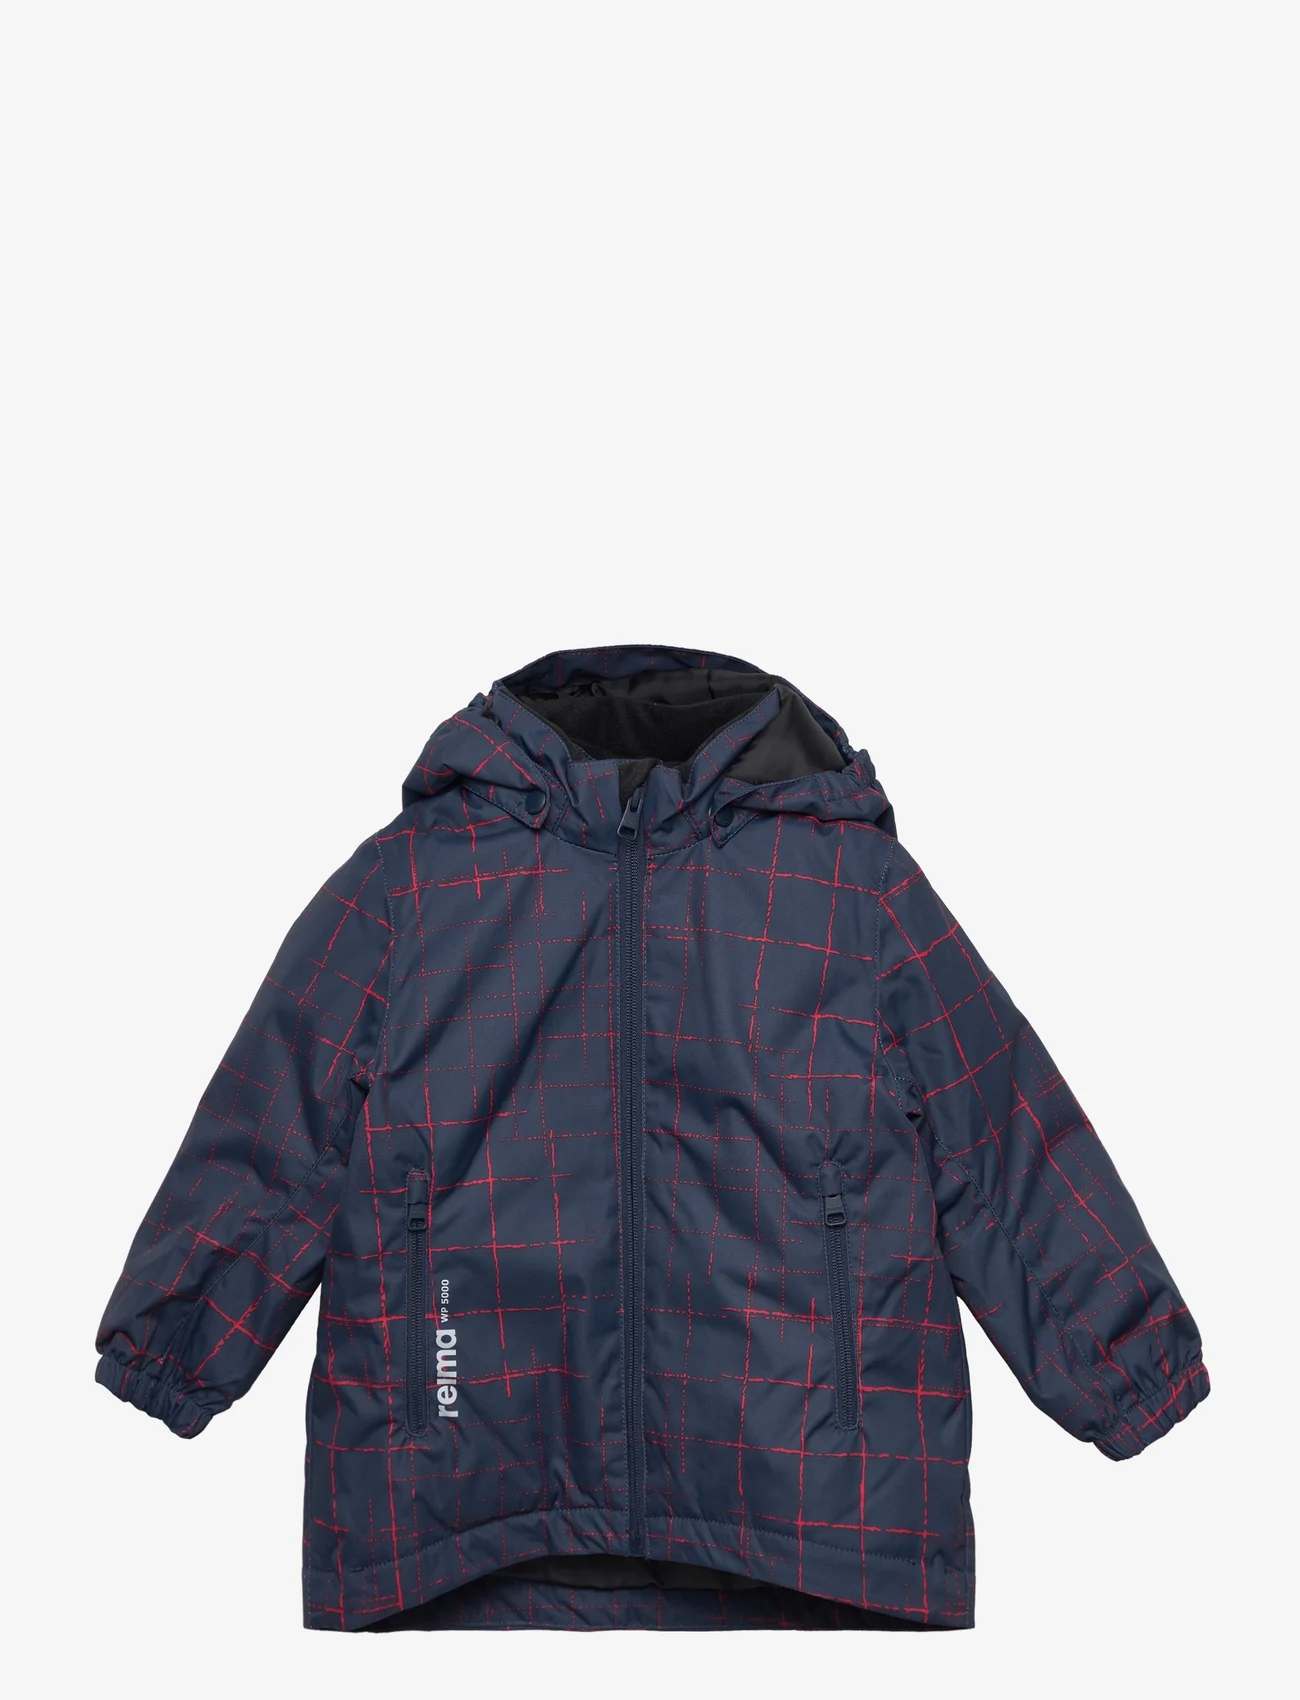 Reima - Winter jacket Sanelma - shell jackets - navy - 0